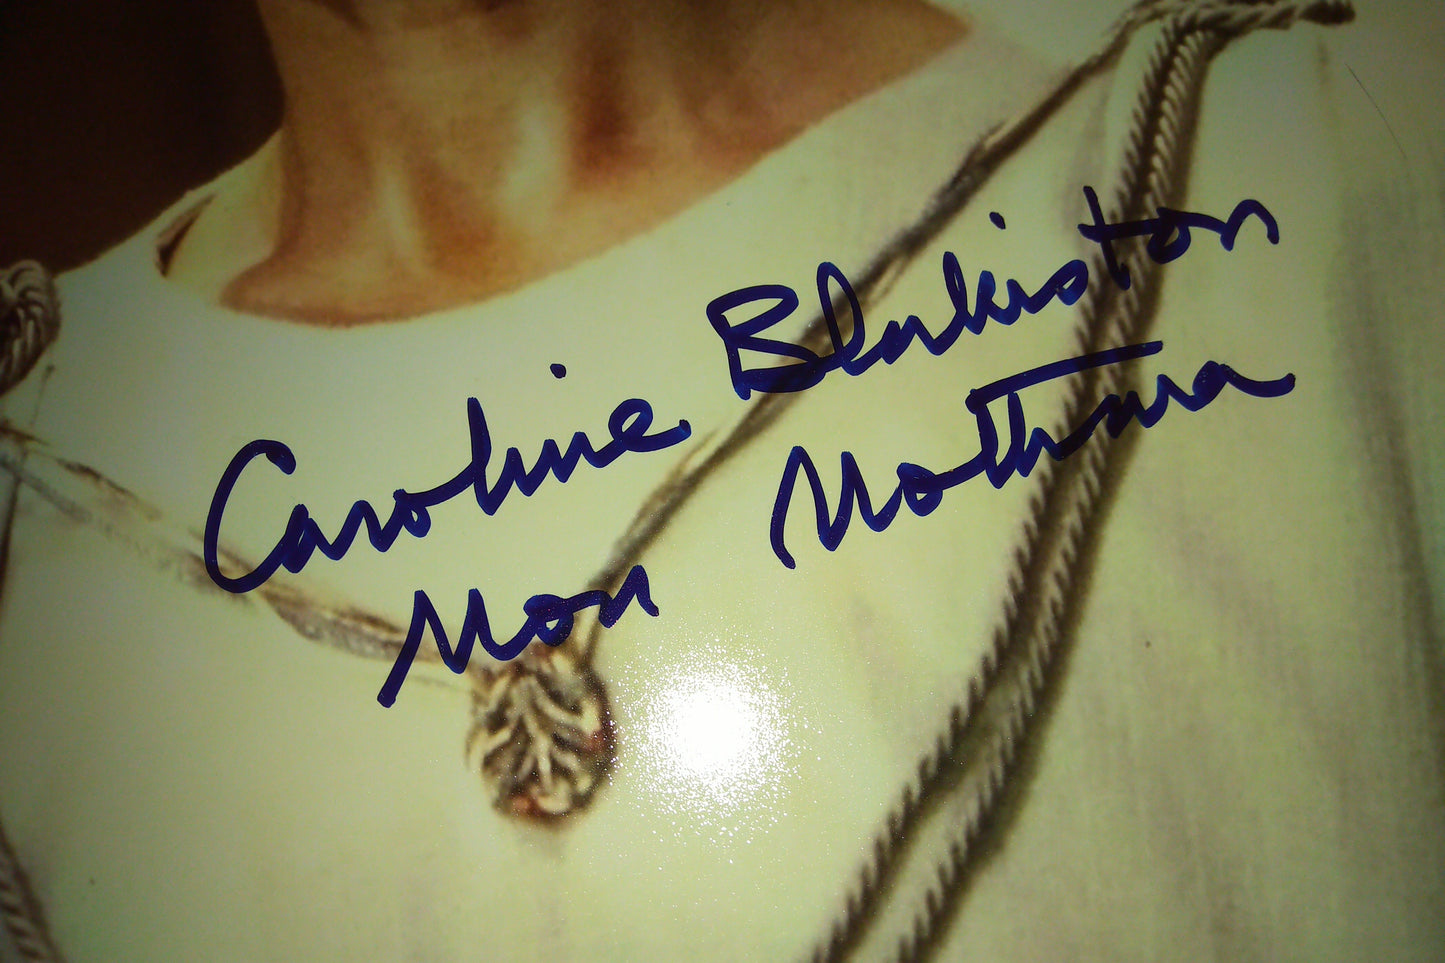 Caroline Blakiston Hand Signed Autograph 11x14 Photo